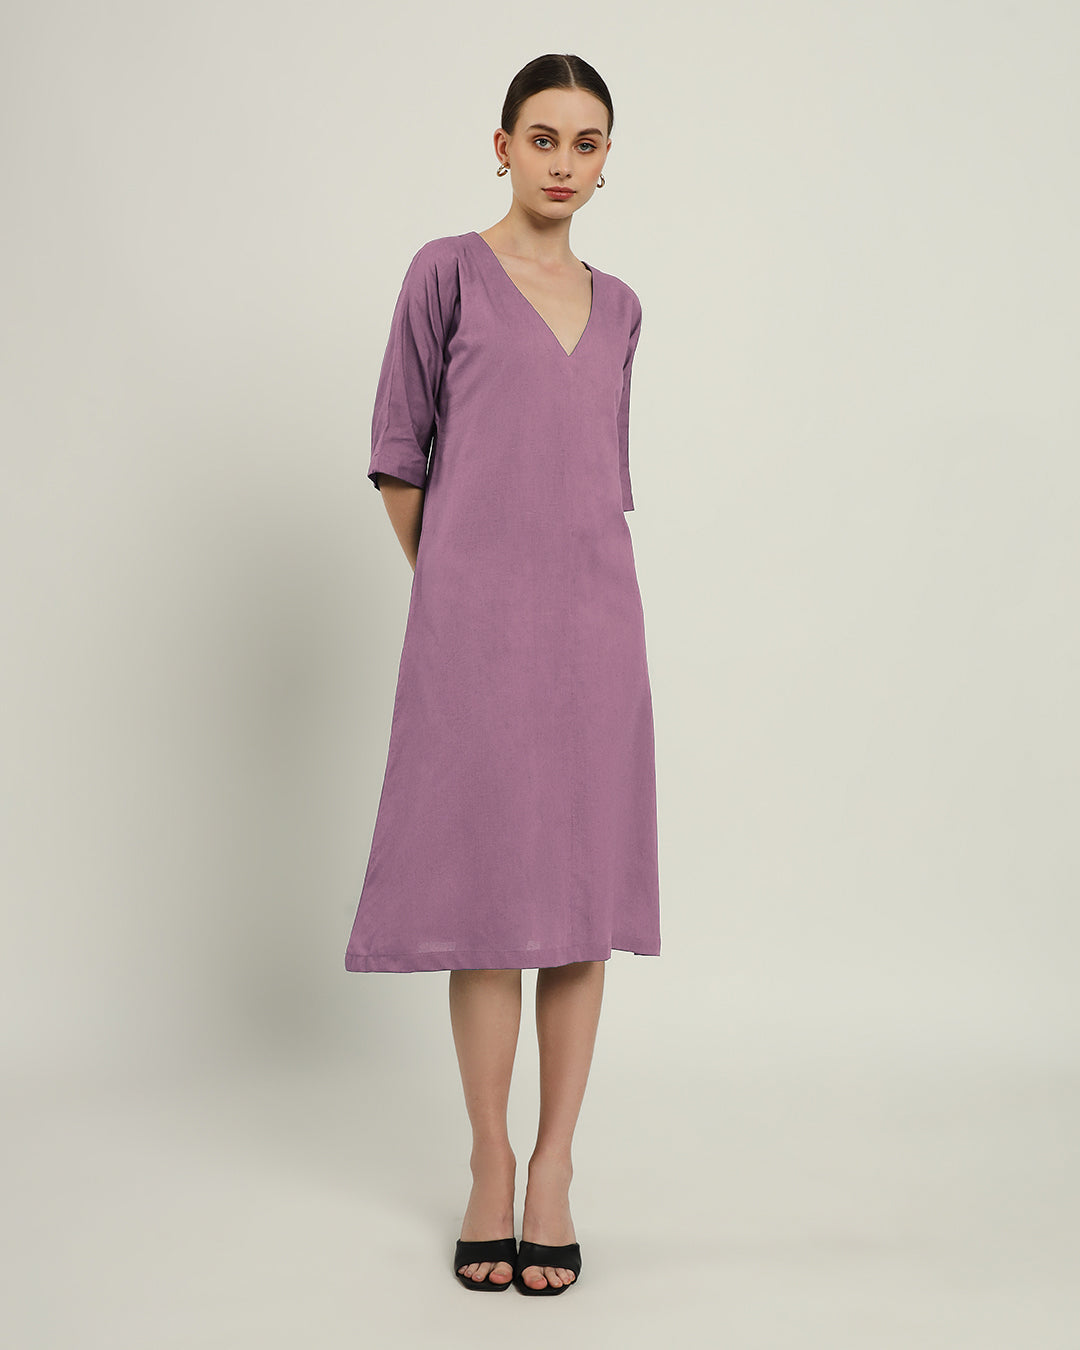 The Mildura Purple Swirl Cotton Dress